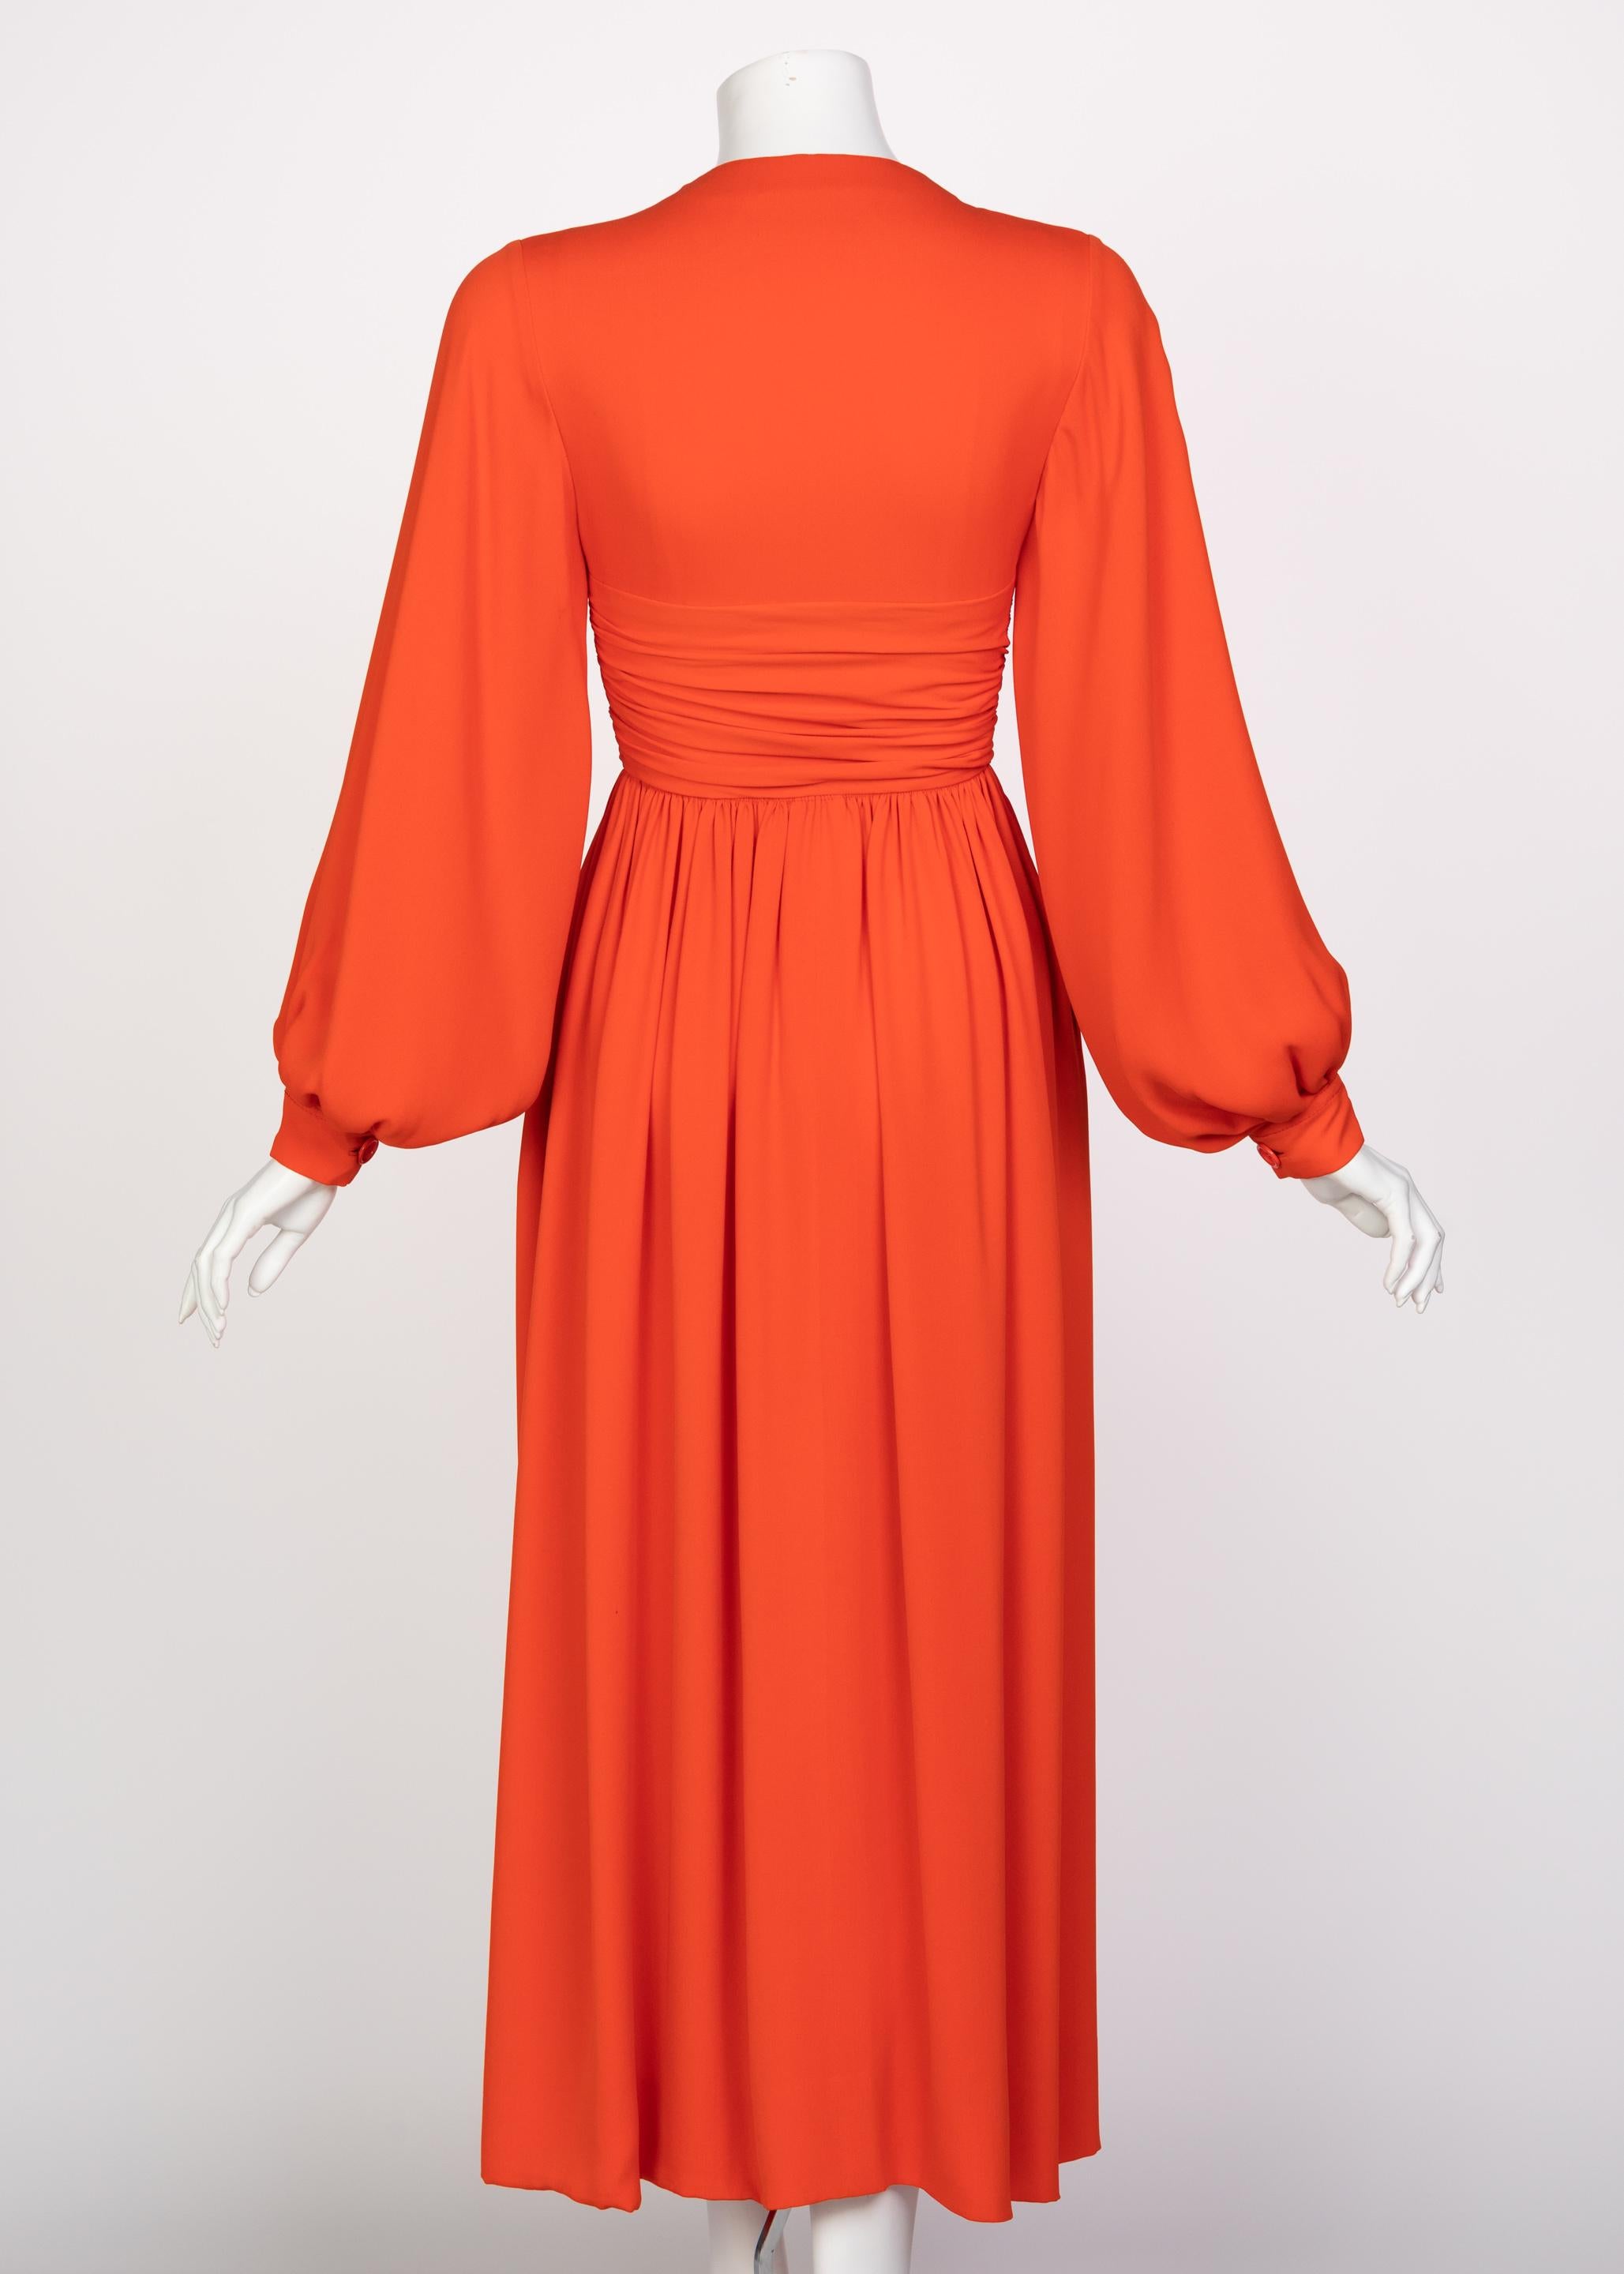 Women's or Men's Galanos Orange Silk Plunge Neck Bishop Sleeve Dress, 1970s For Sale